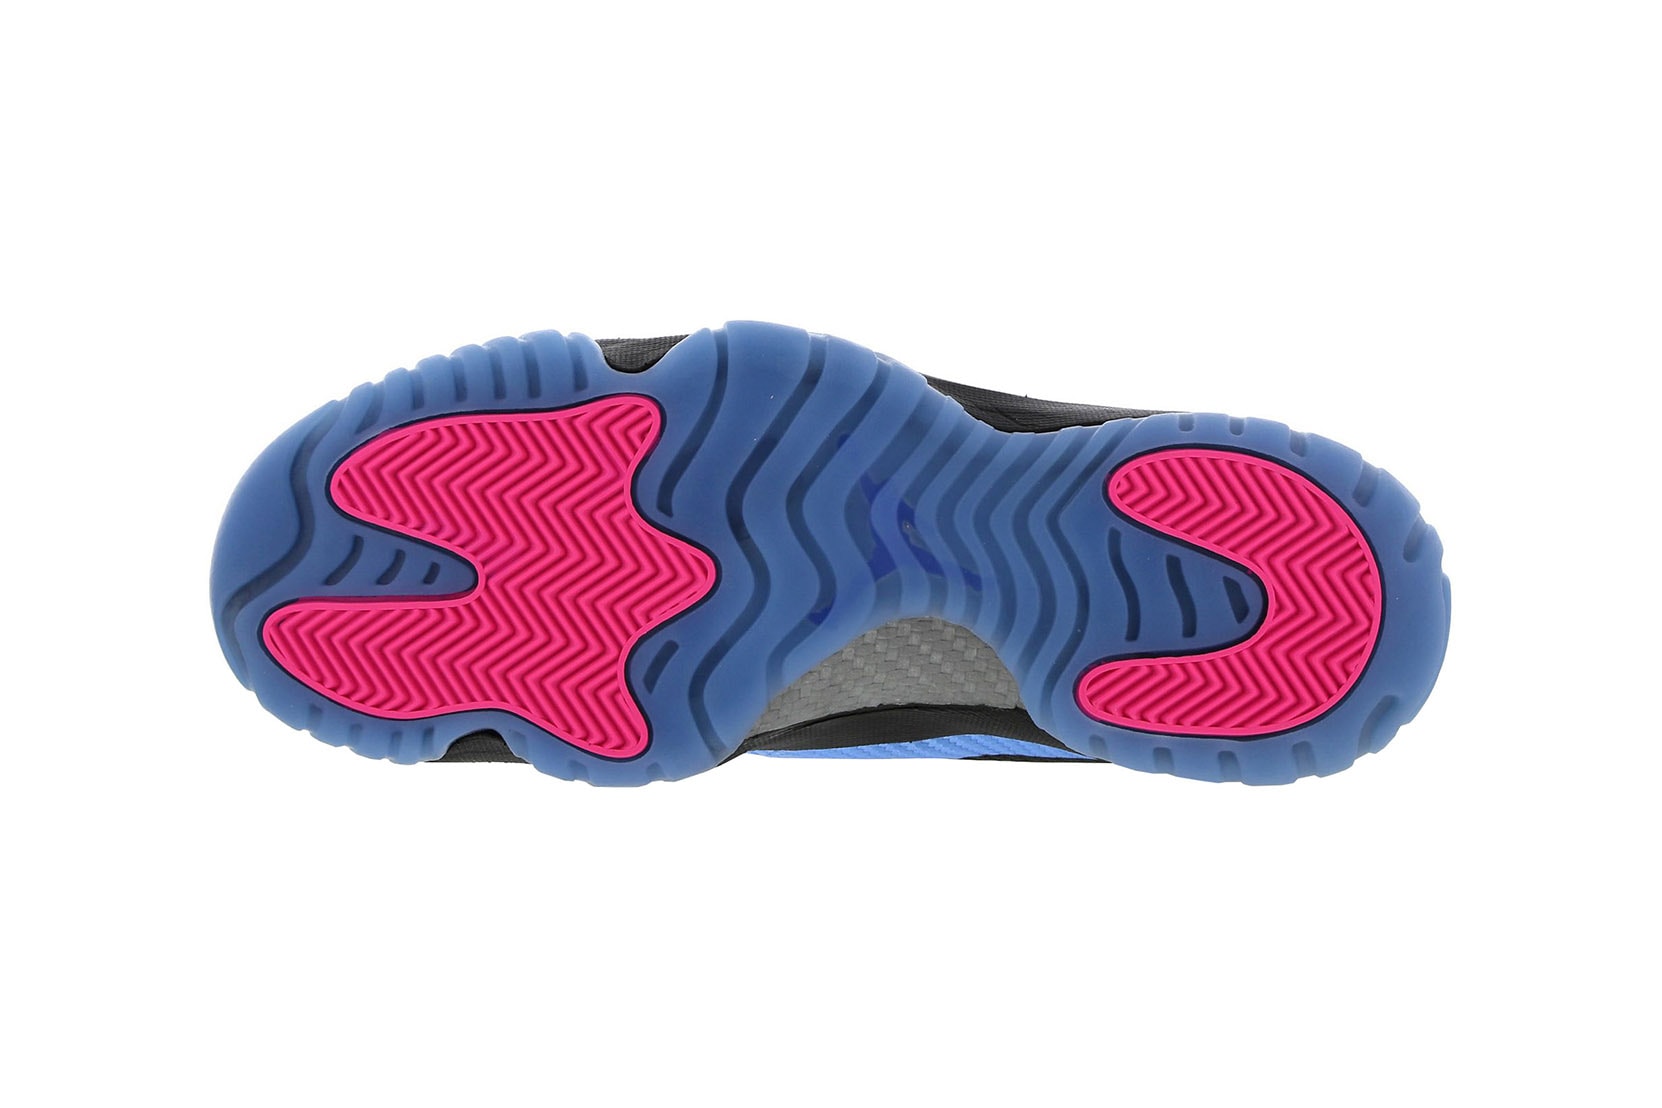 Jordan Future Quai 54 Release Details Shoes Kicks Sneakers Trainers Releasing Available Soon Purchase Cop Buy